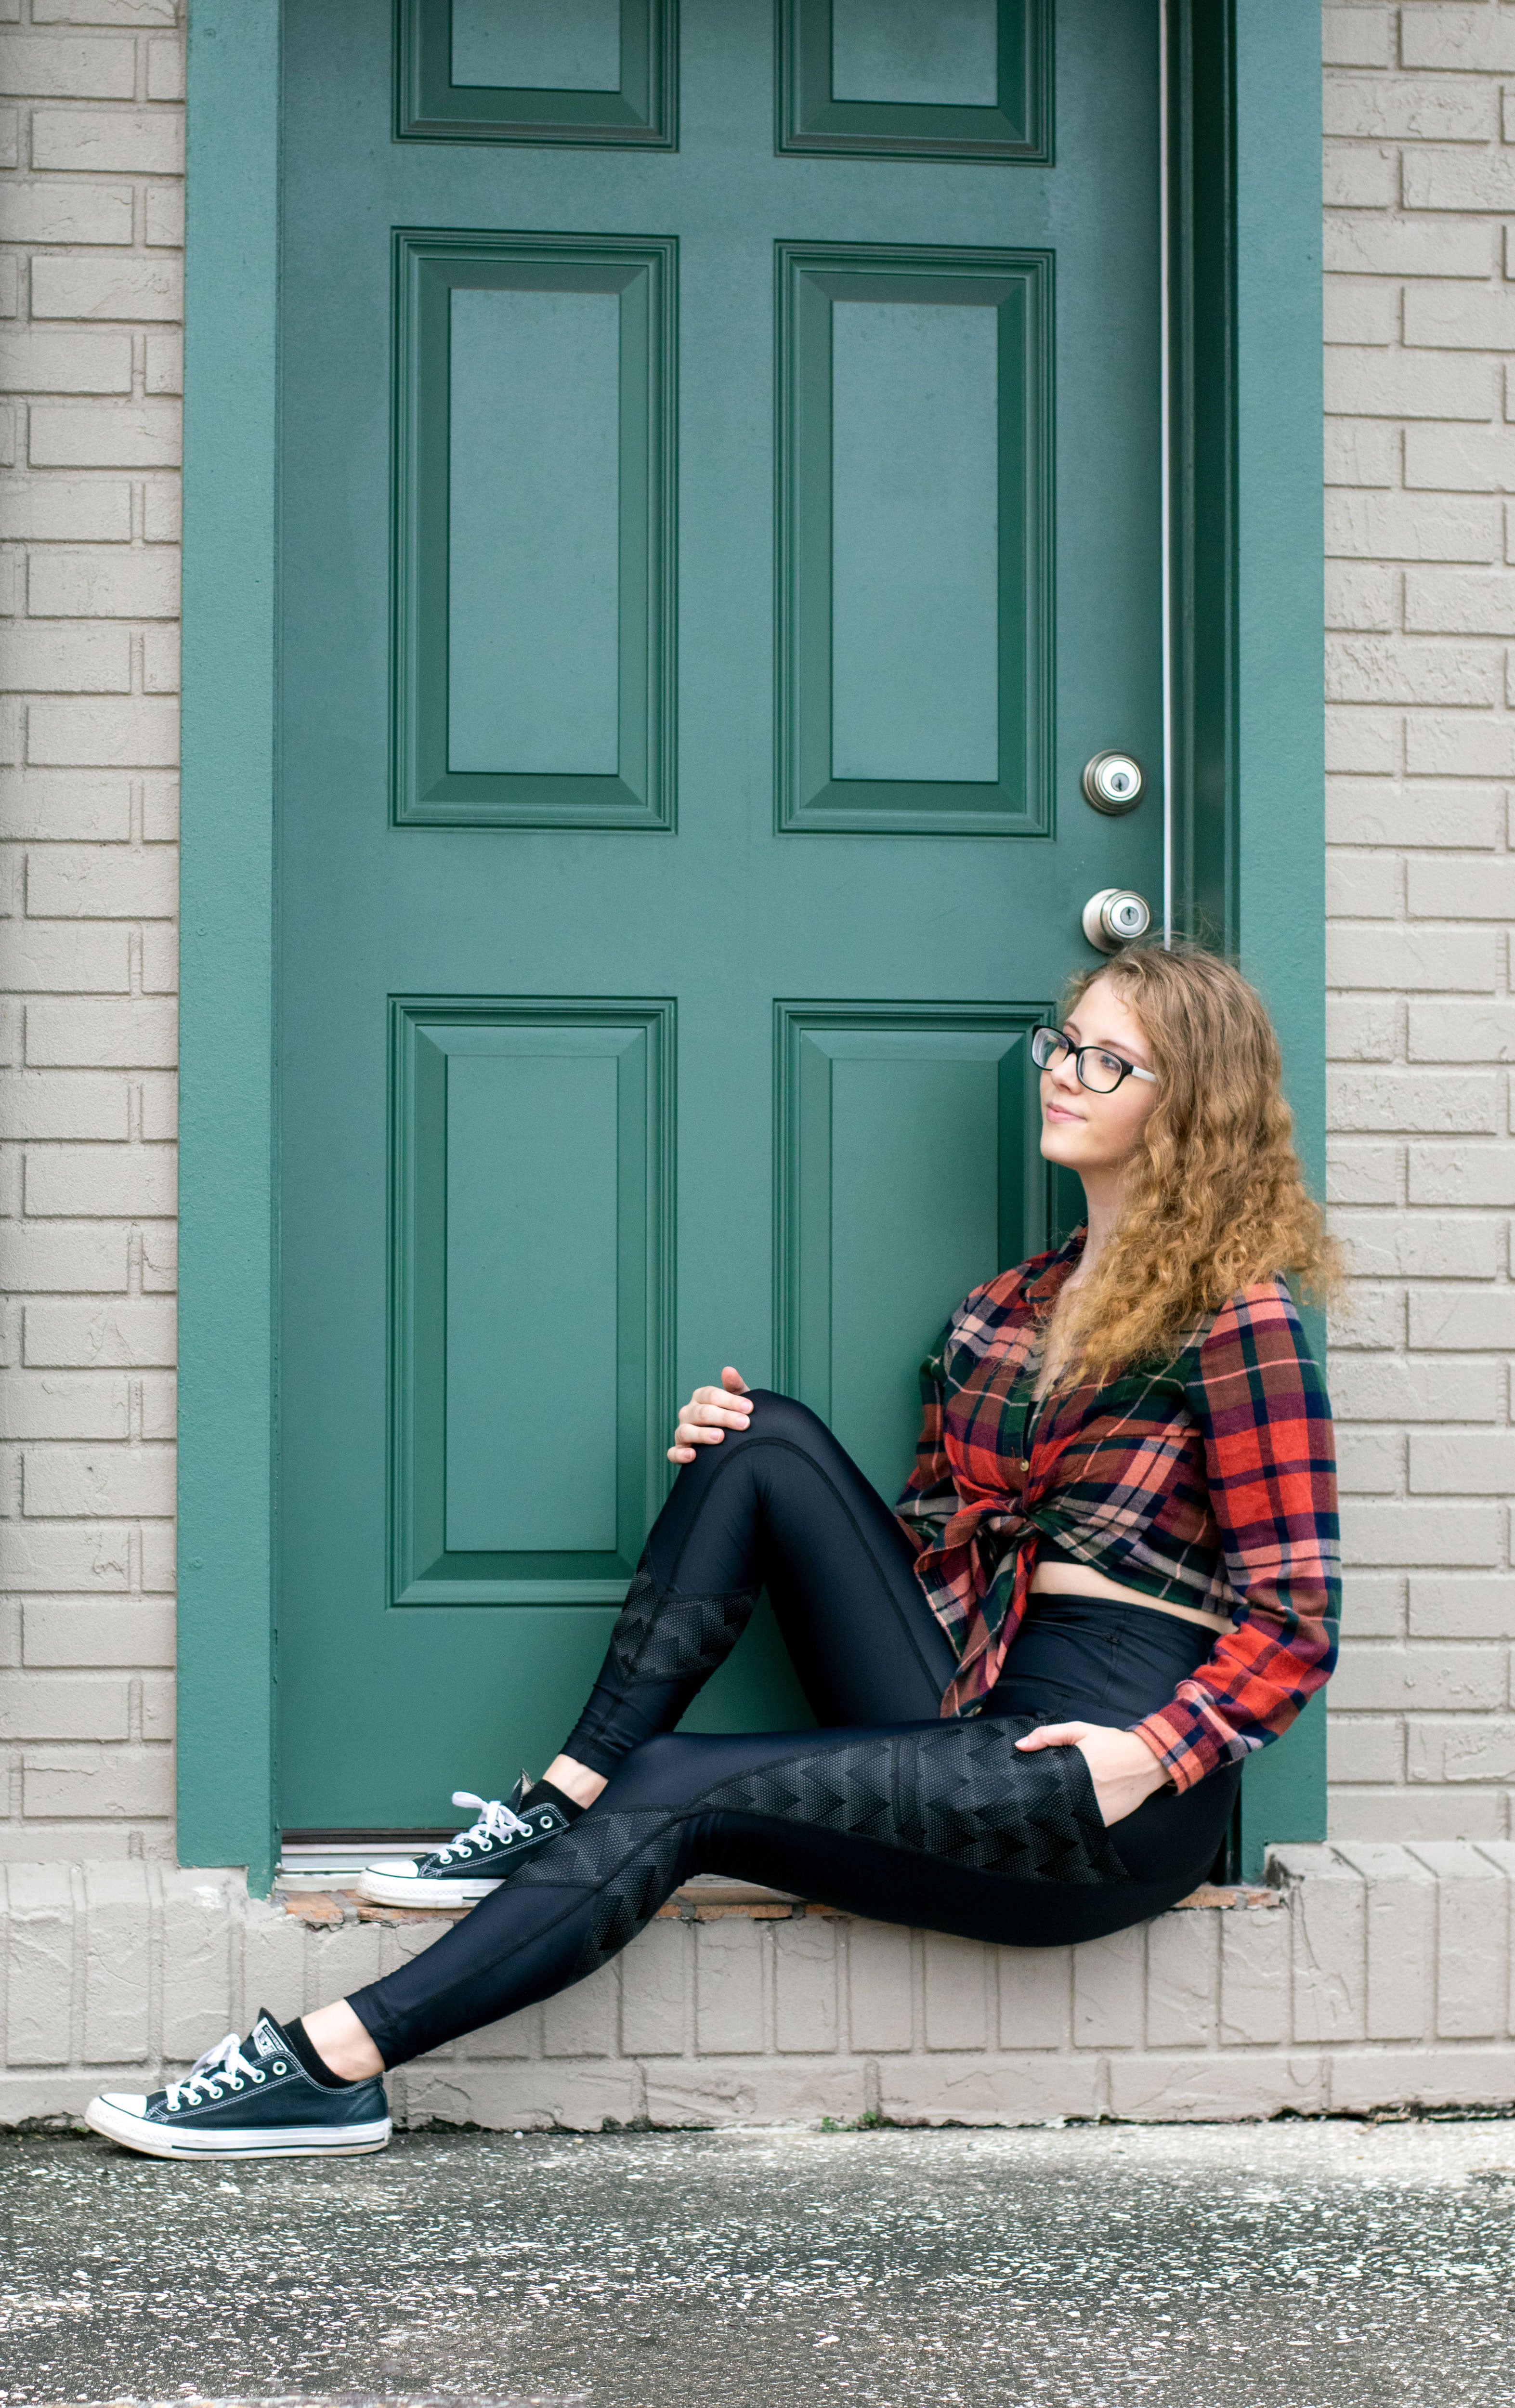 Model sitting in doorway wearing Zag Reflective leggings